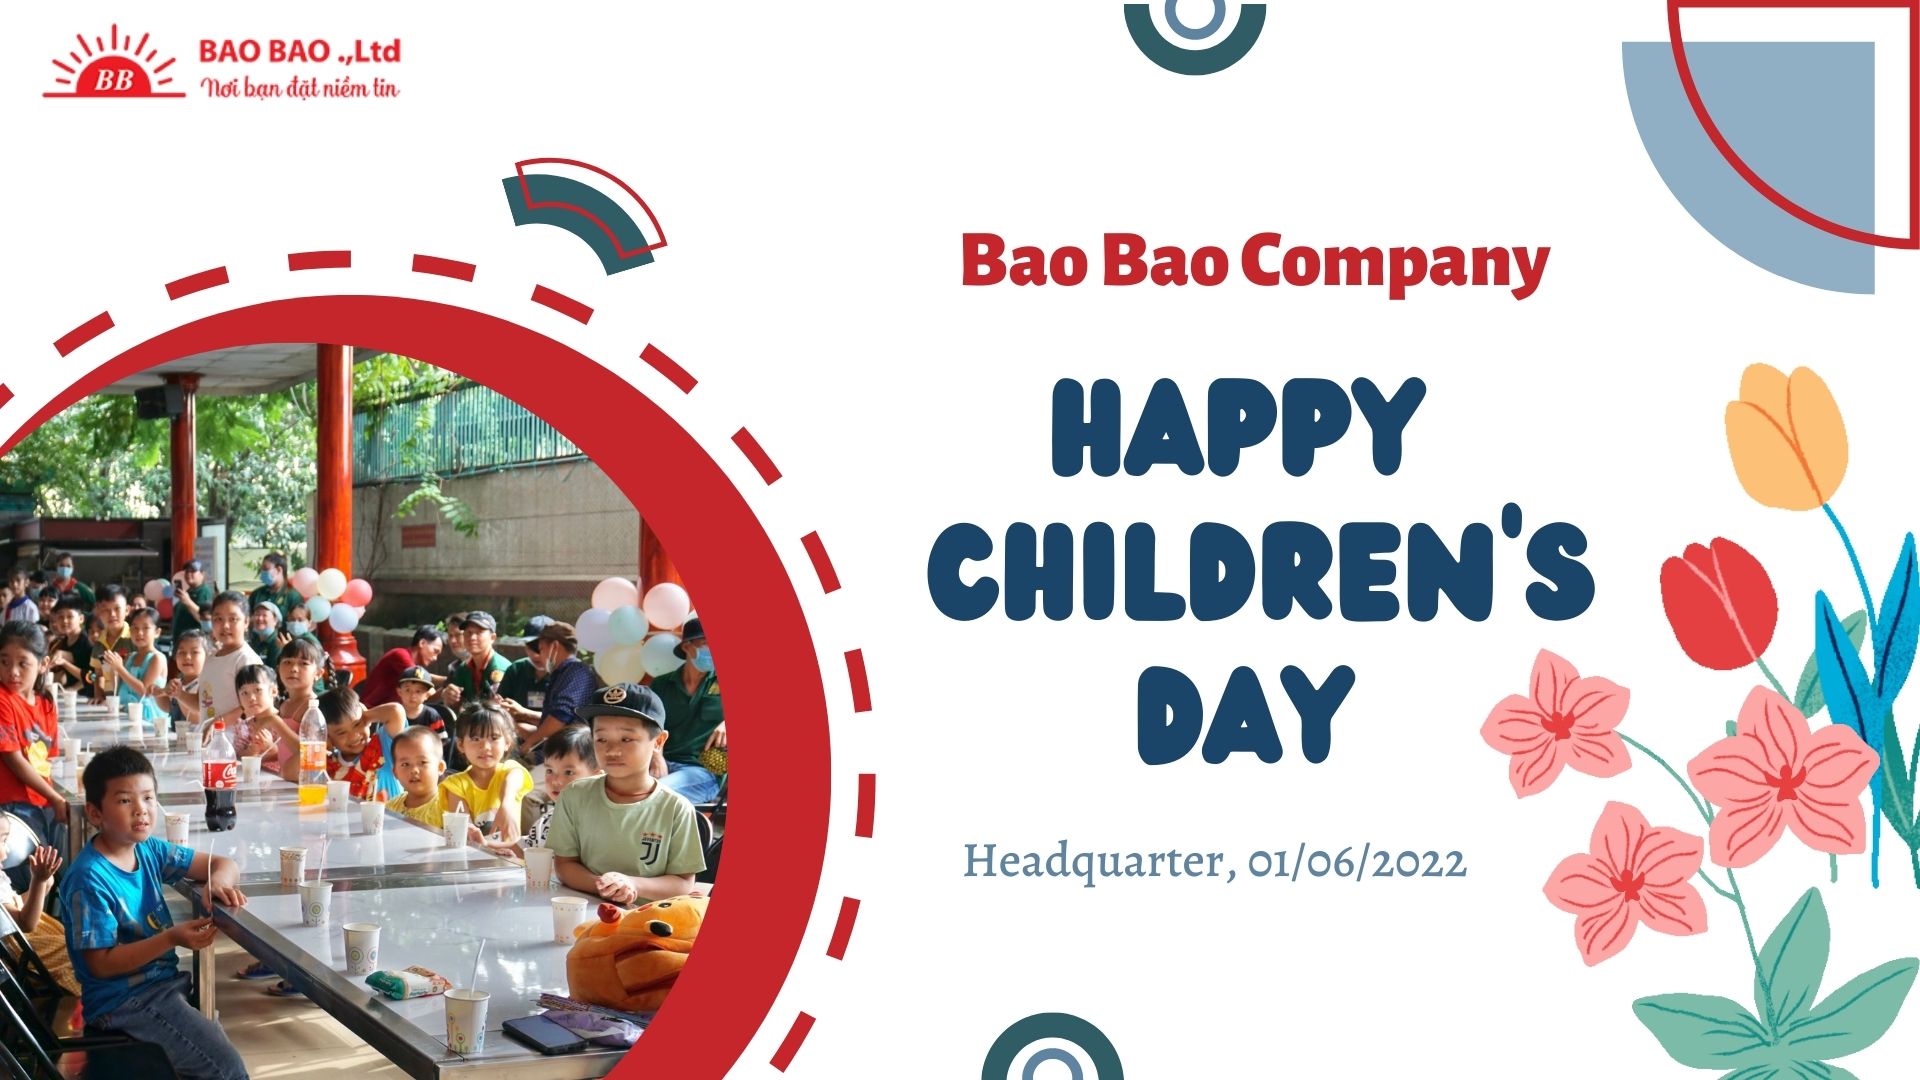 Celebrating International Children's Day with Bao Bao